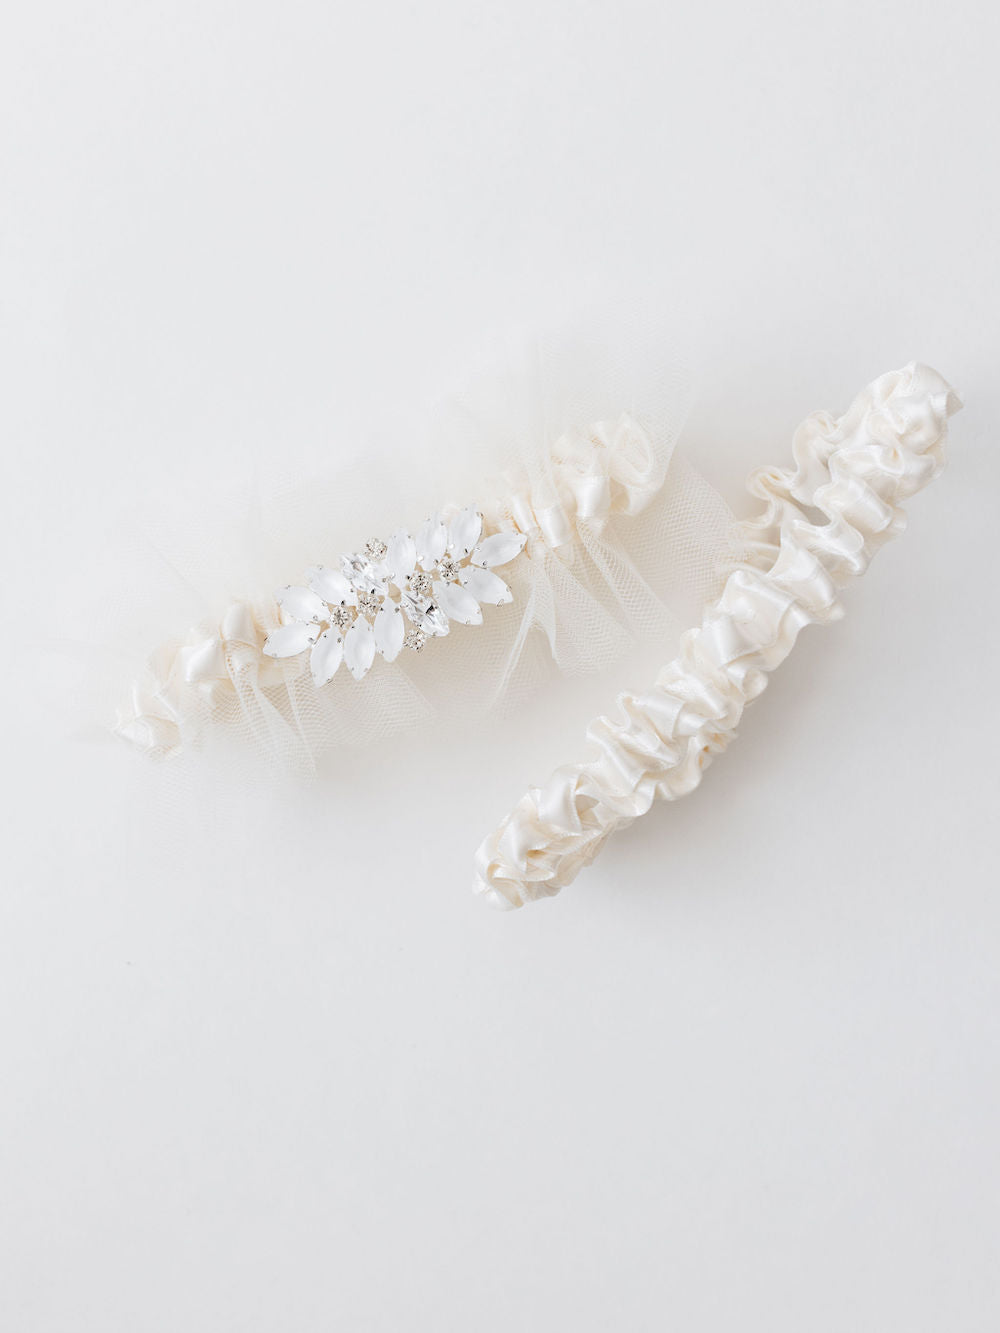 ivory tulle wedding garter heirloom set with main garter sparkle rhinestone detailing and satin ivory tossing garter handmade by The Garter Girl